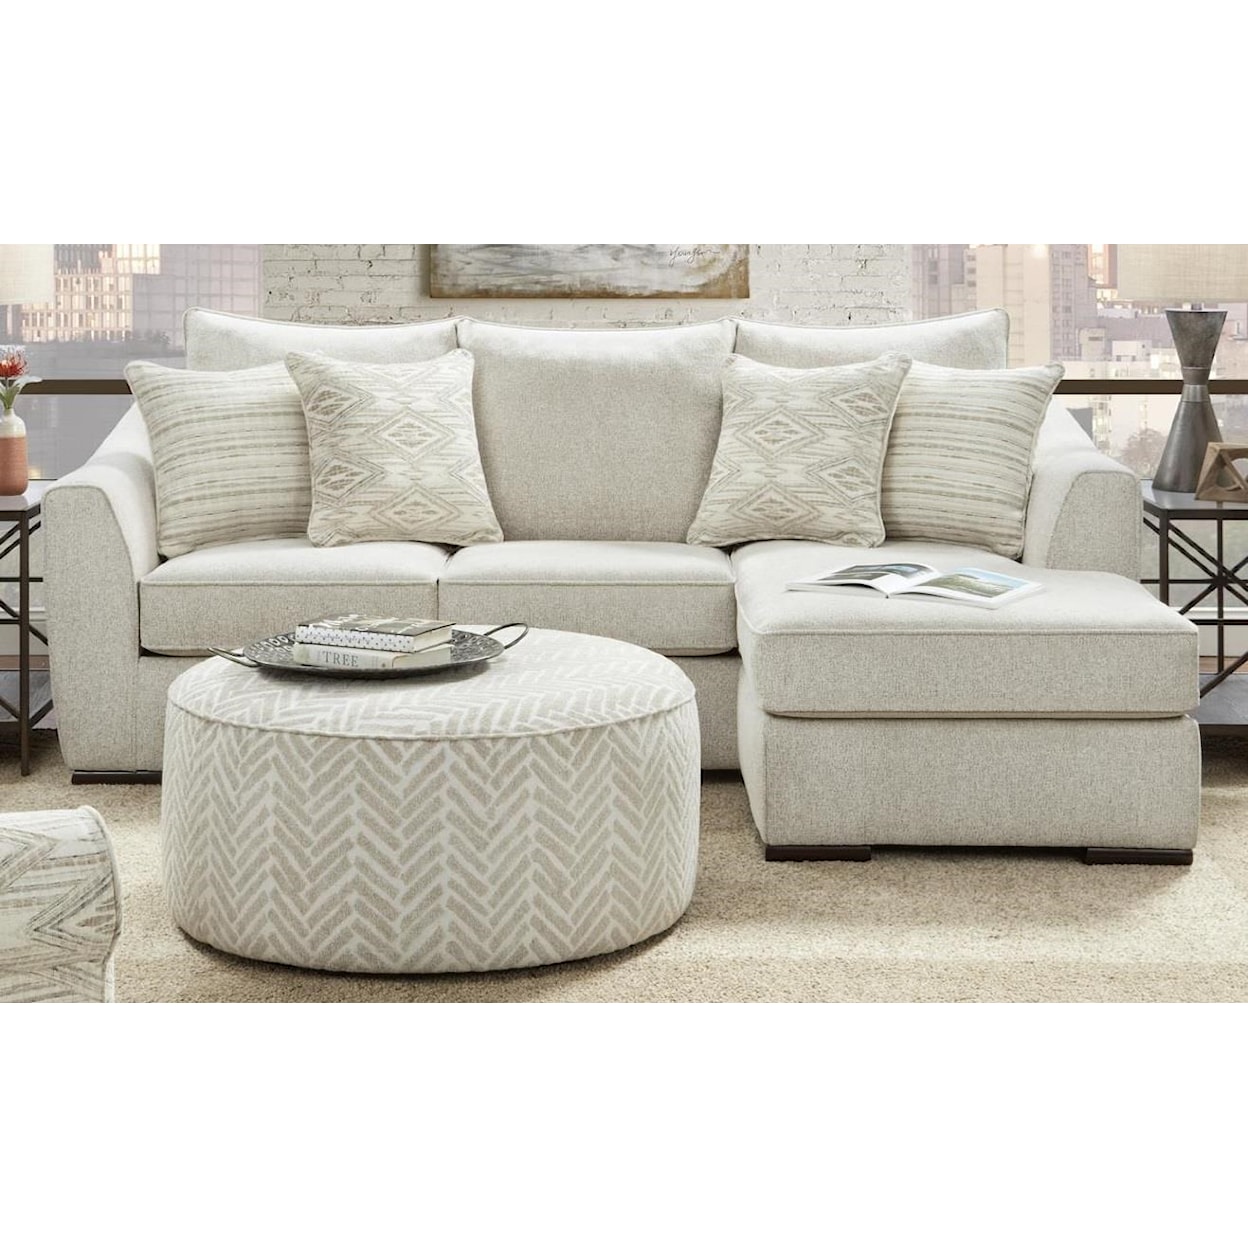 Fusion Furniture Horizon Sofa with Chaise